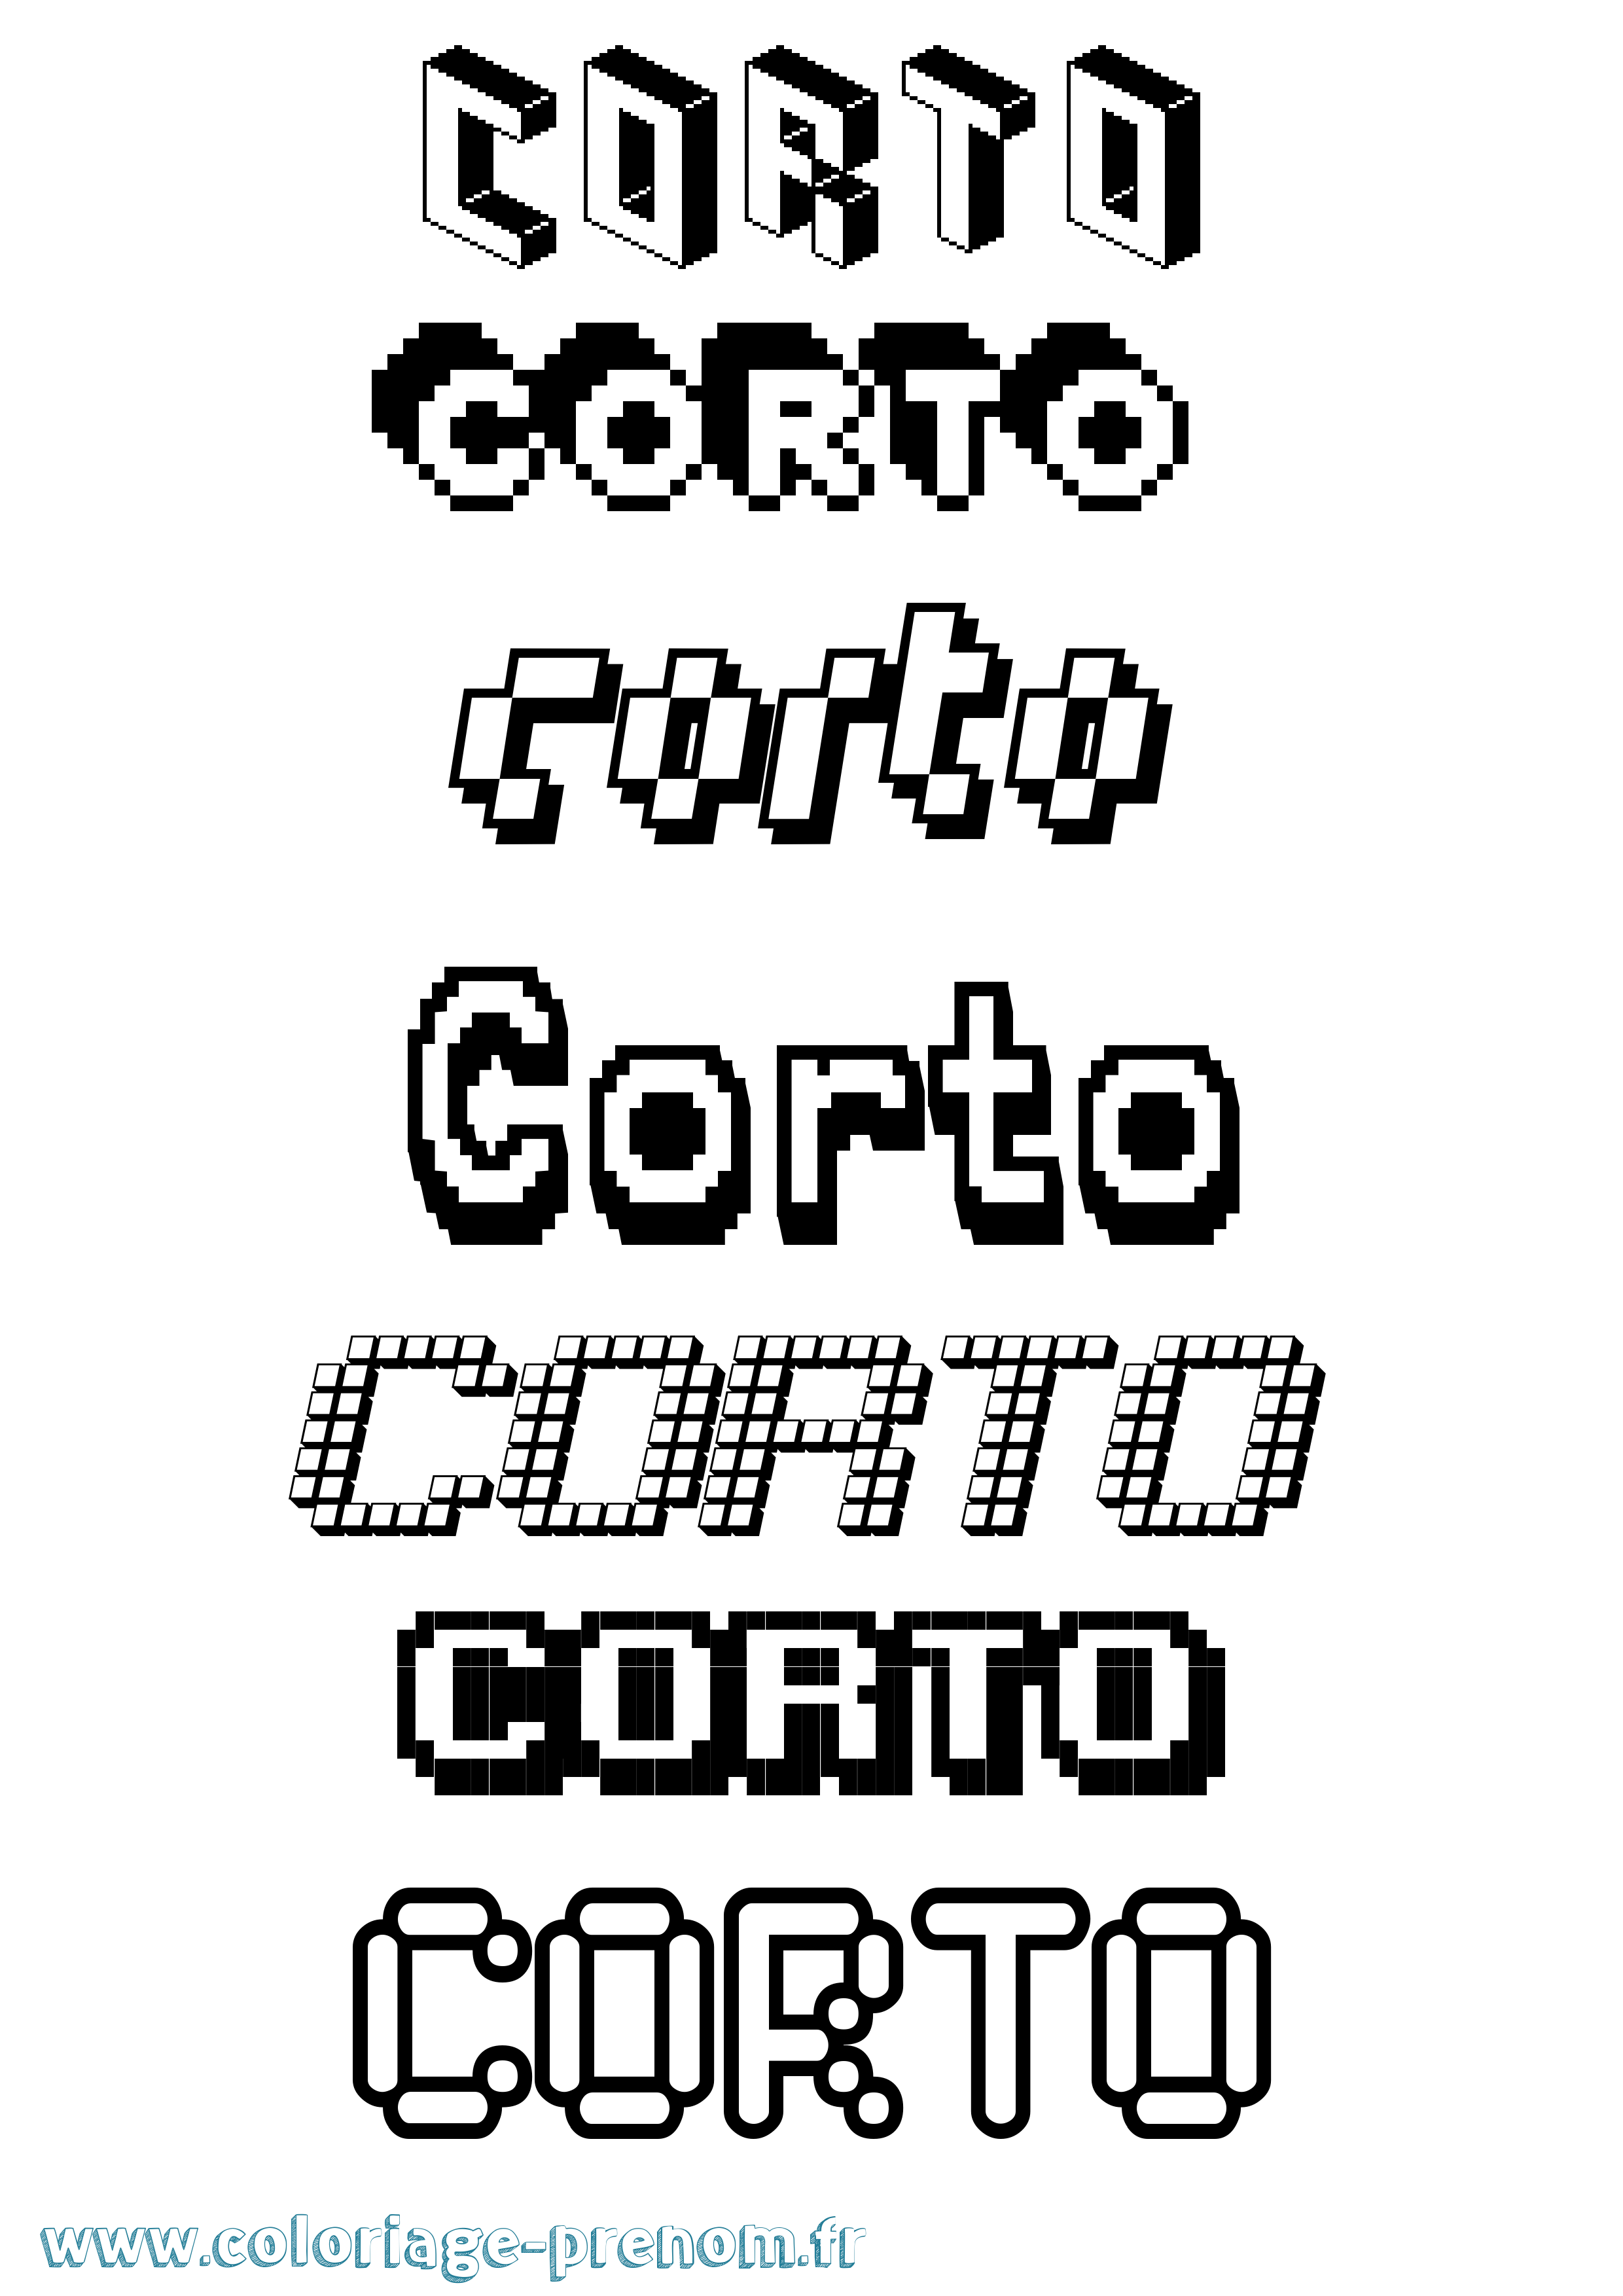 Coloriage prénom Corto Pixel